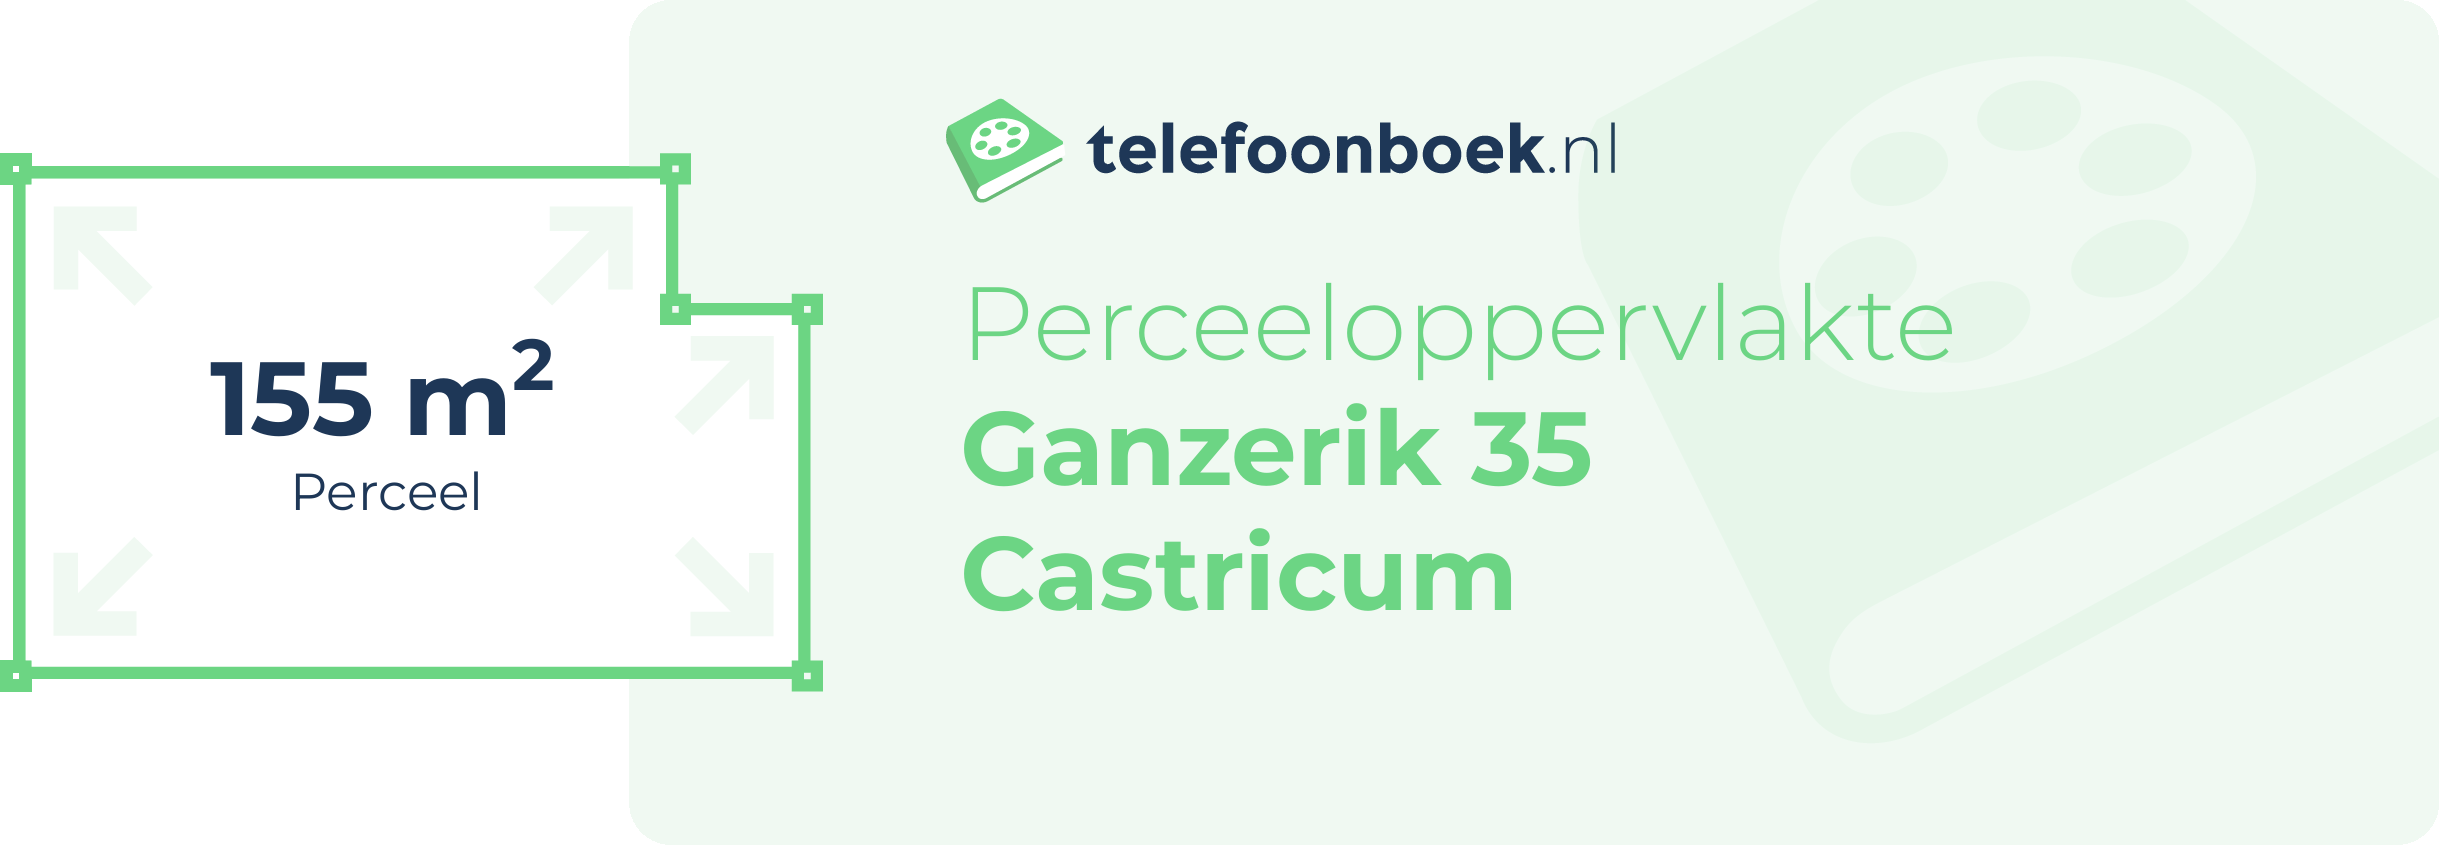 Perceeloppervlakte Ganzerik 35 Castricum